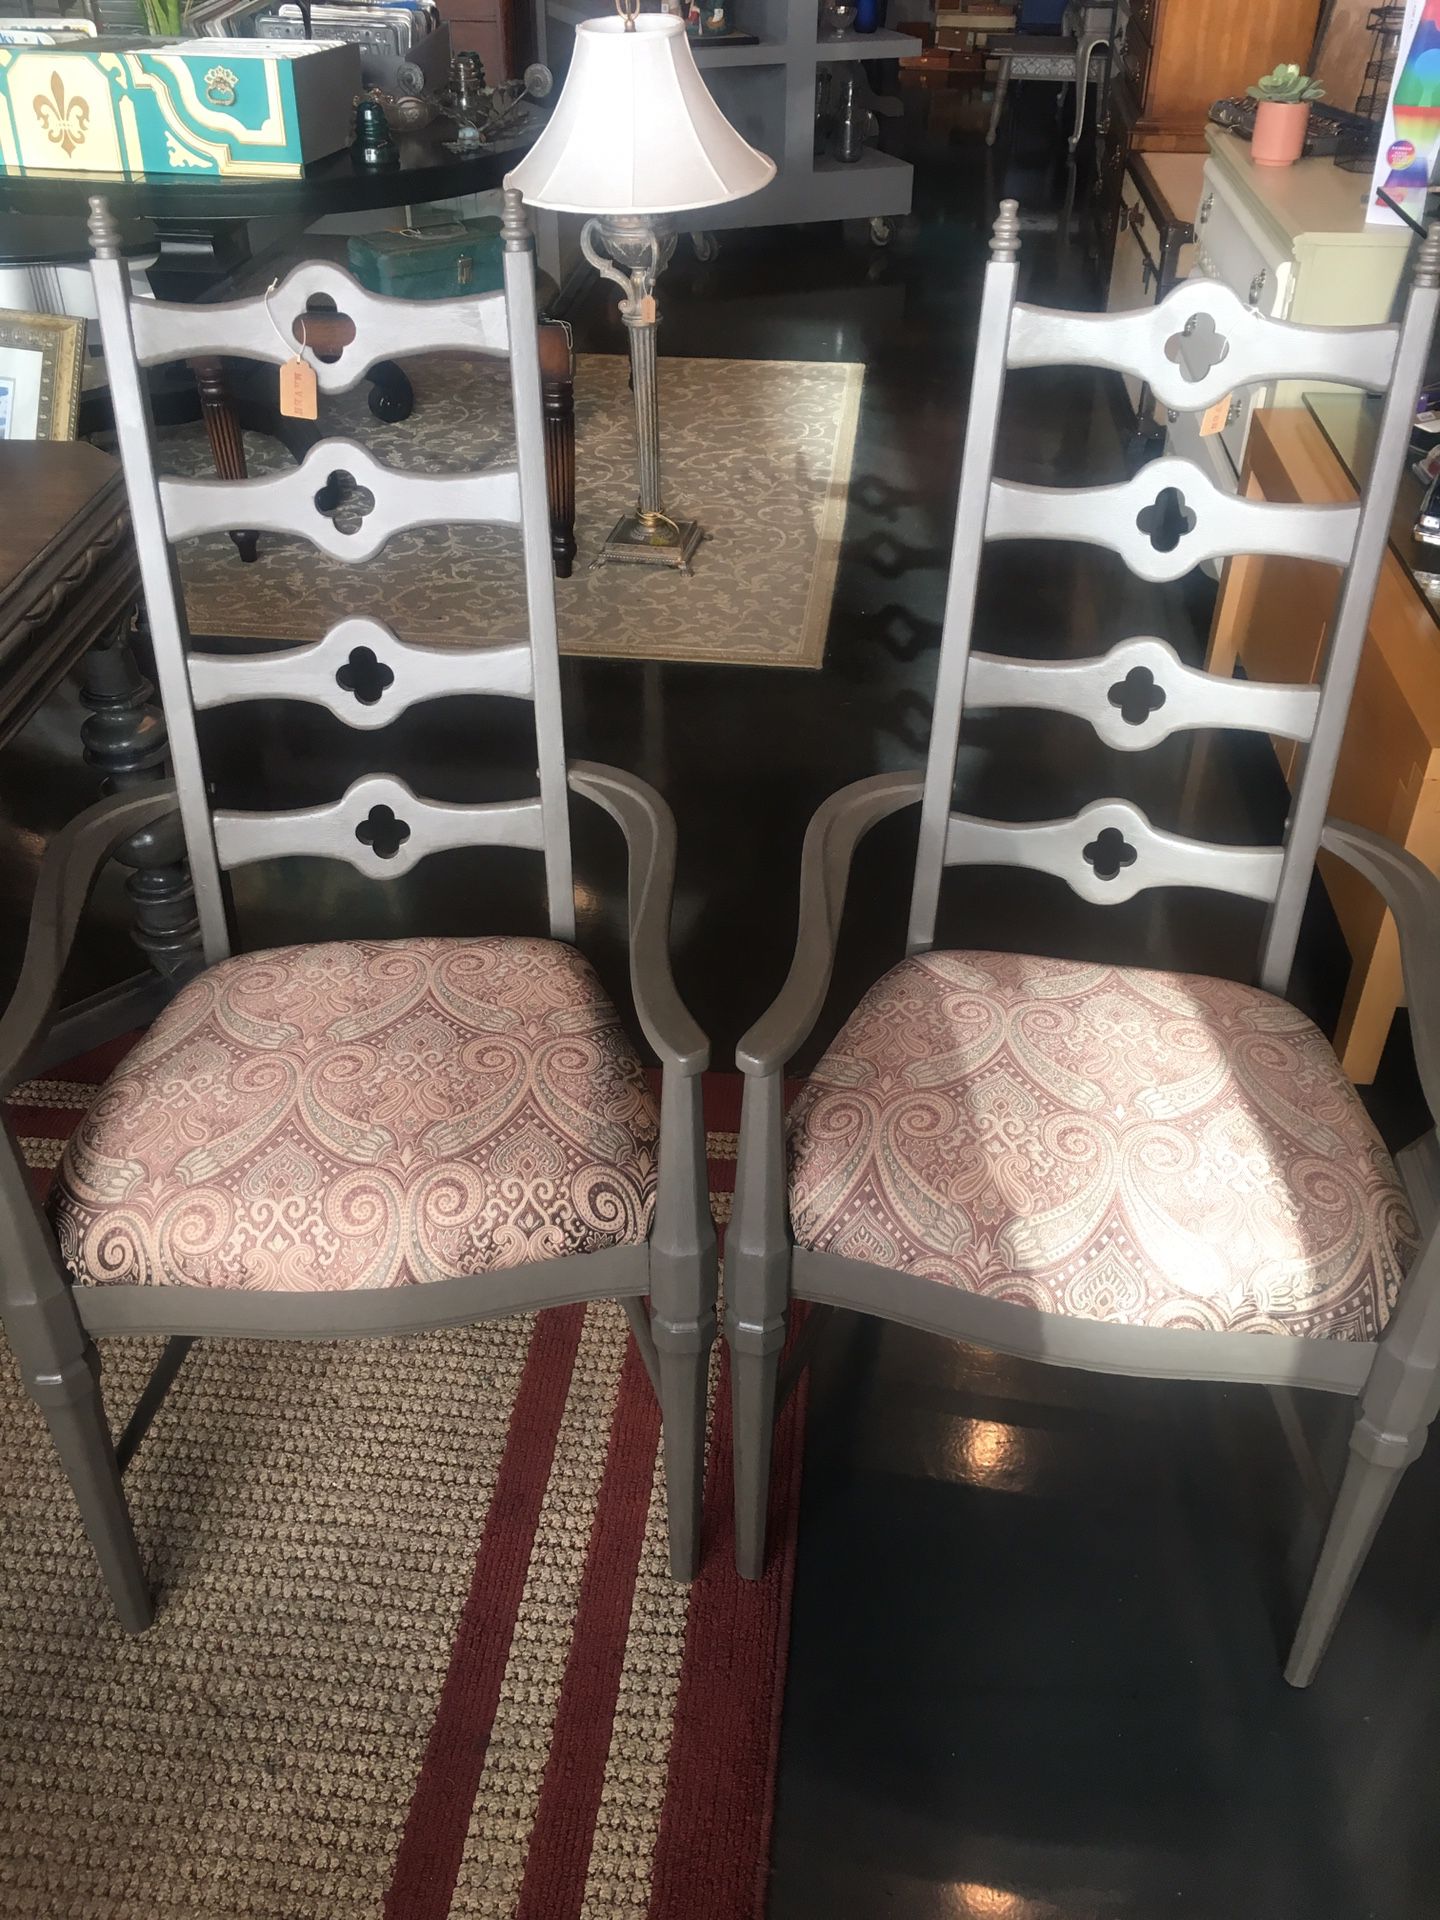 2 Matching wood chairs